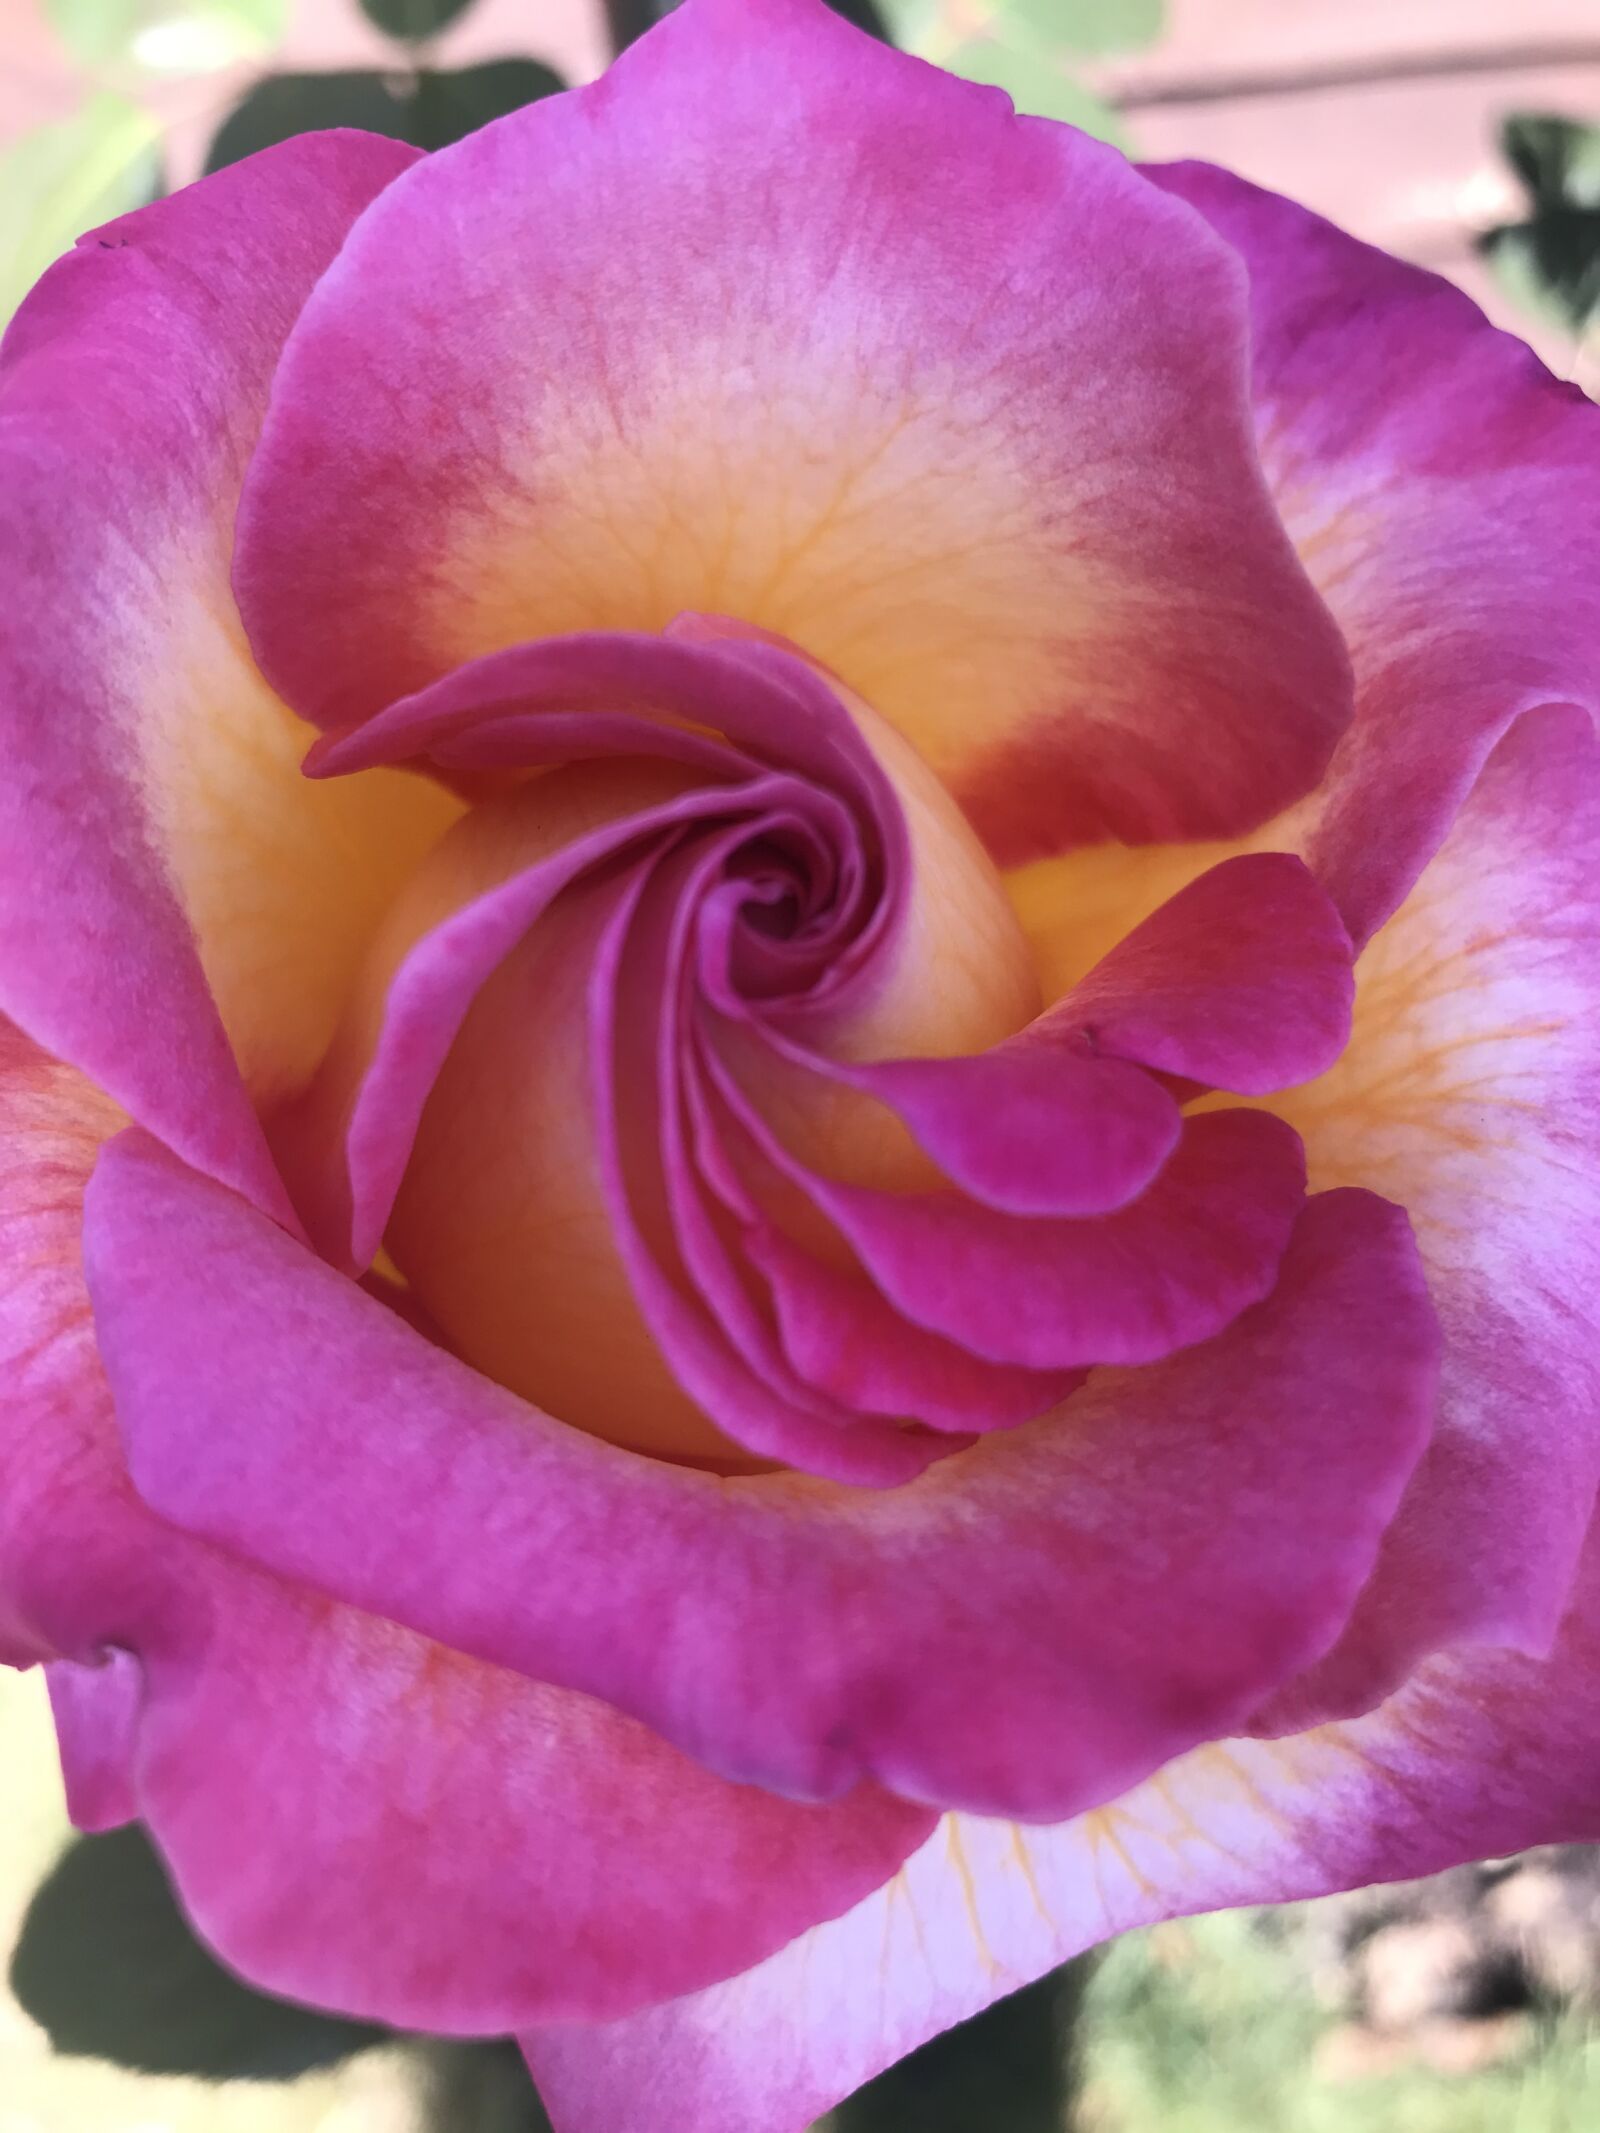 Apple iPhone 7 Plus + iPhone 7 Plus back dual camera 3.99mm f/1.8 sample photo. Rose, swirl, flower photography